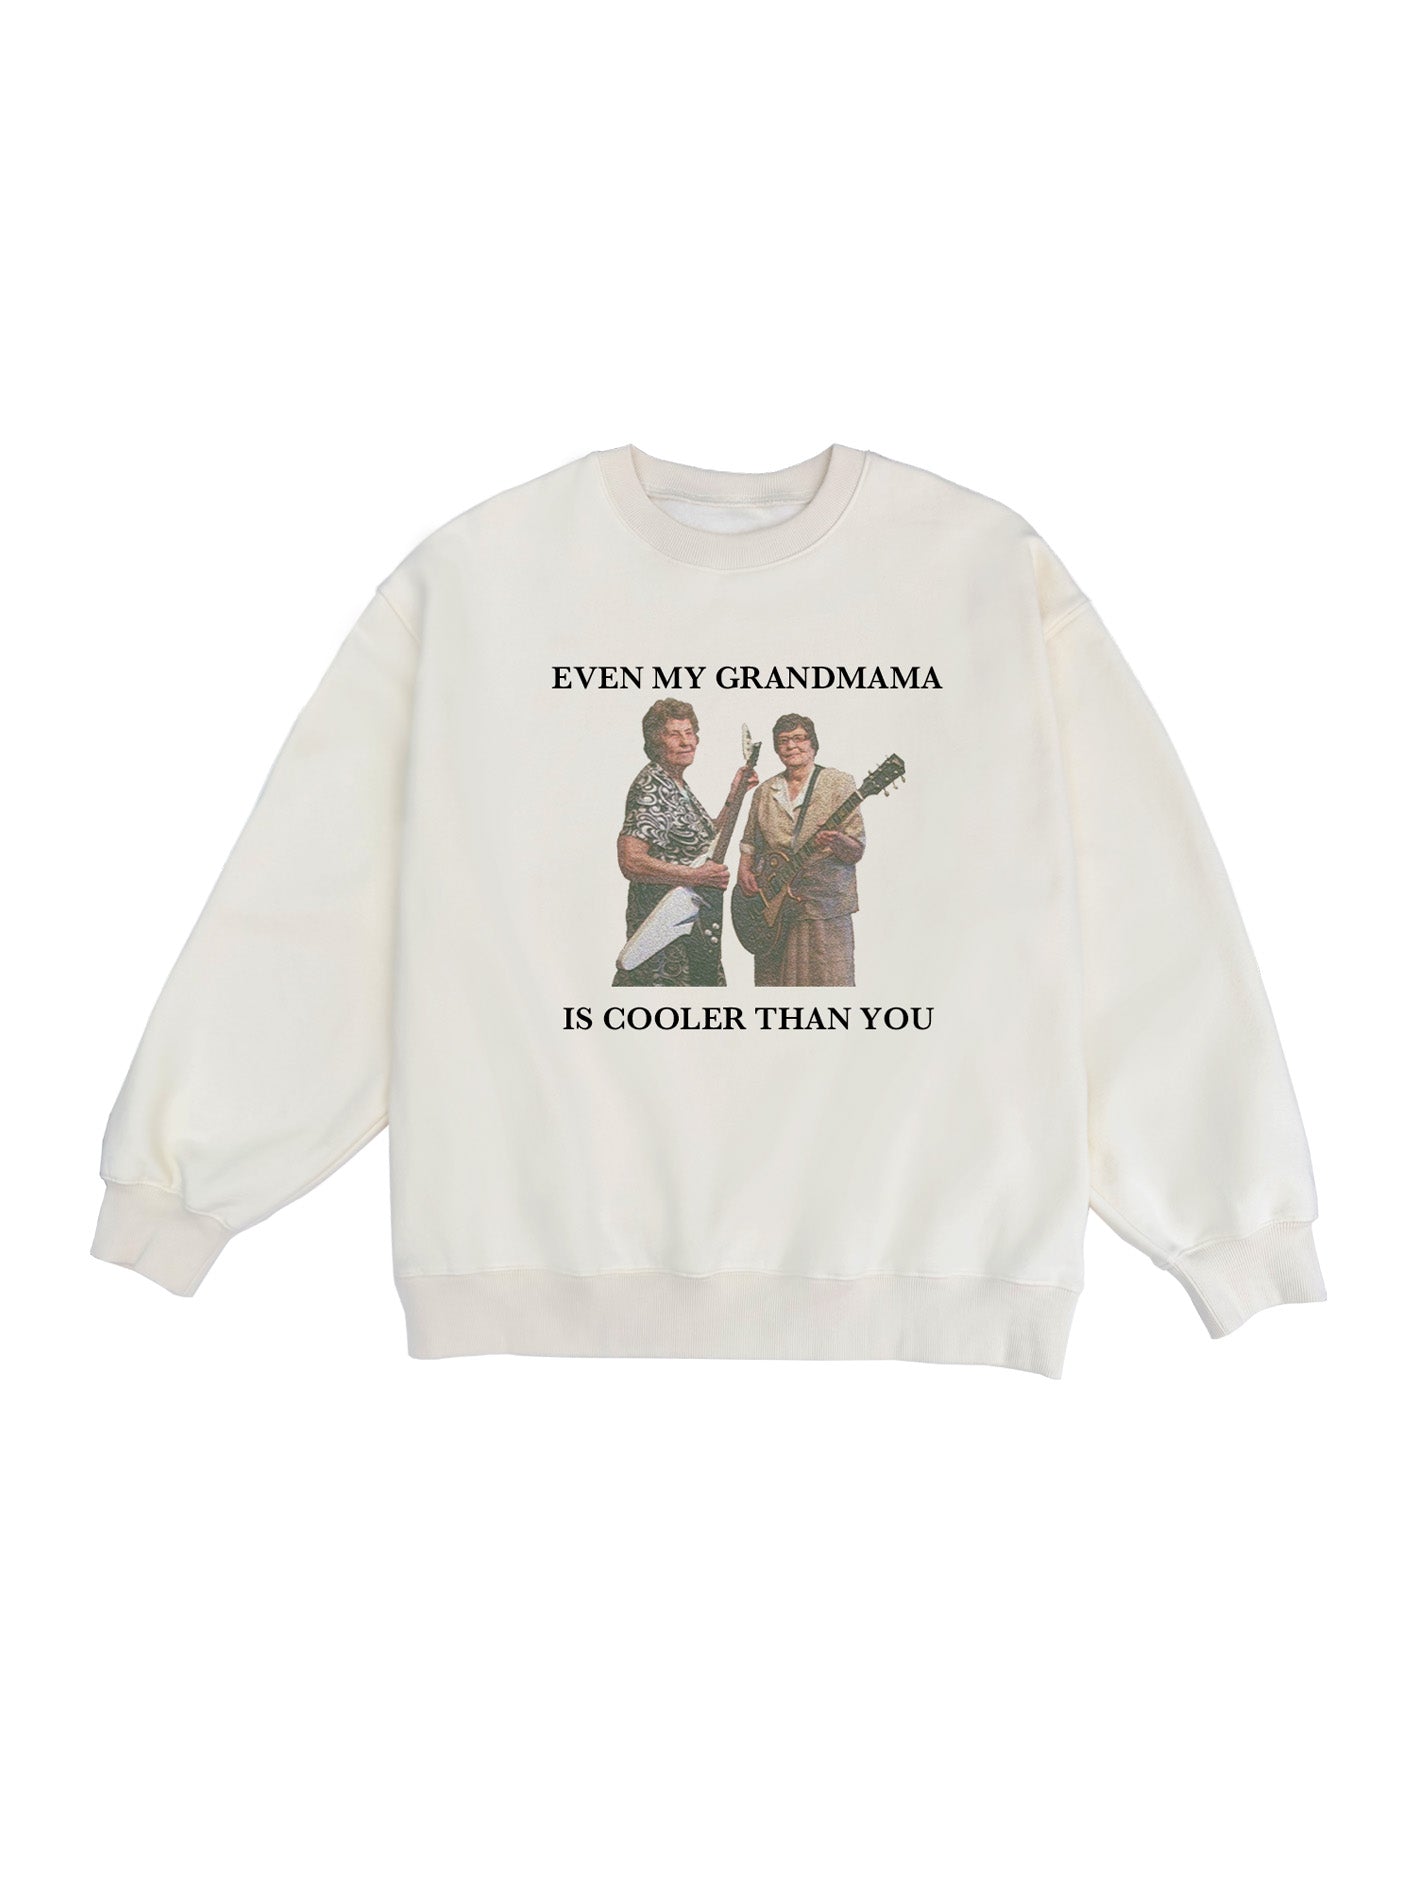  beige Grandmama Band sweatshirt